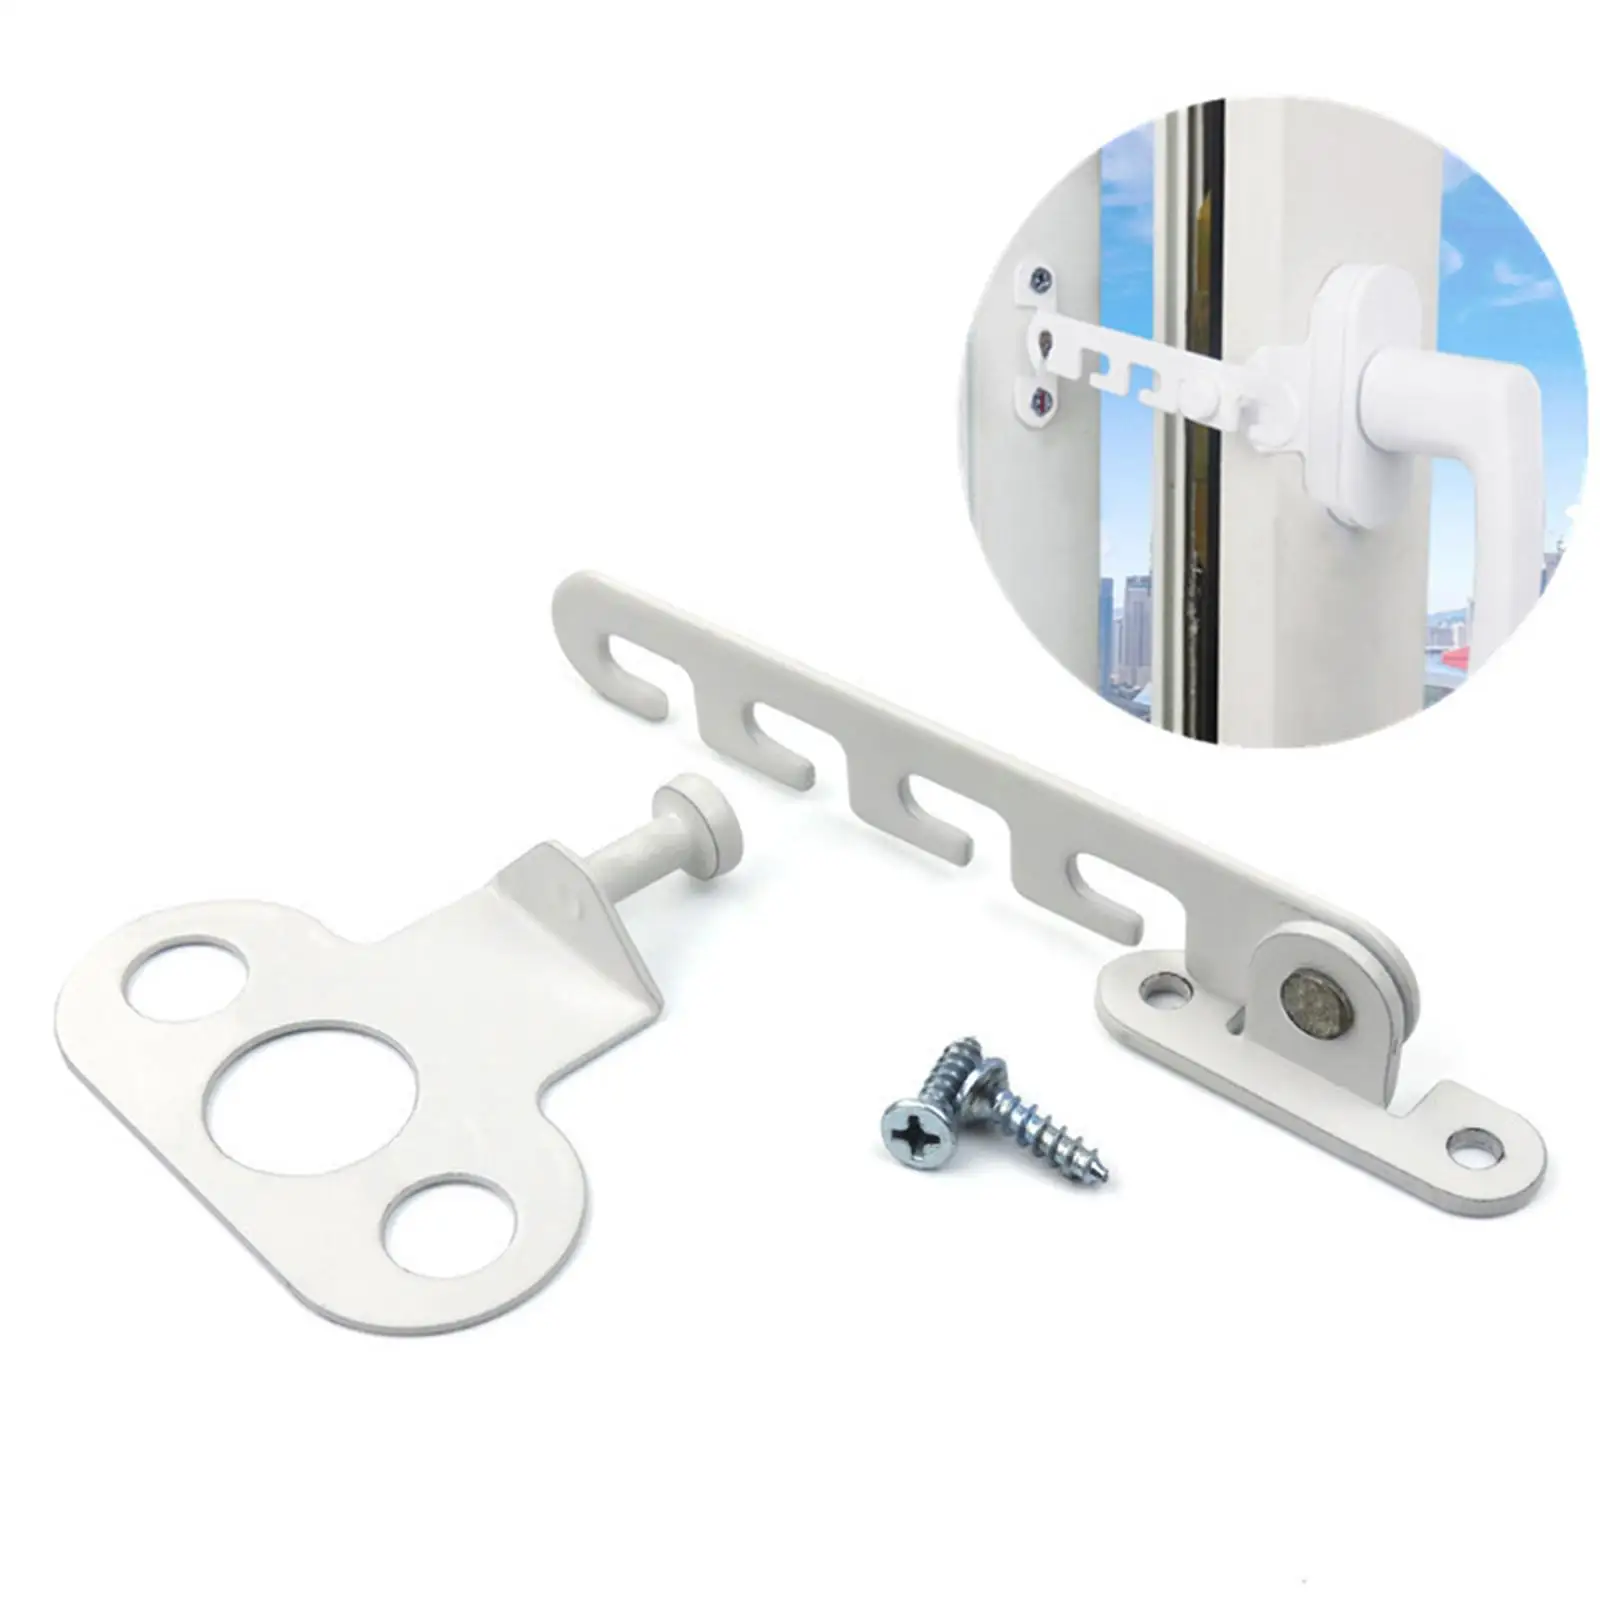 Iron Casement Stay Window Latch Vertical Restrictor Lock Stopper Stay Position